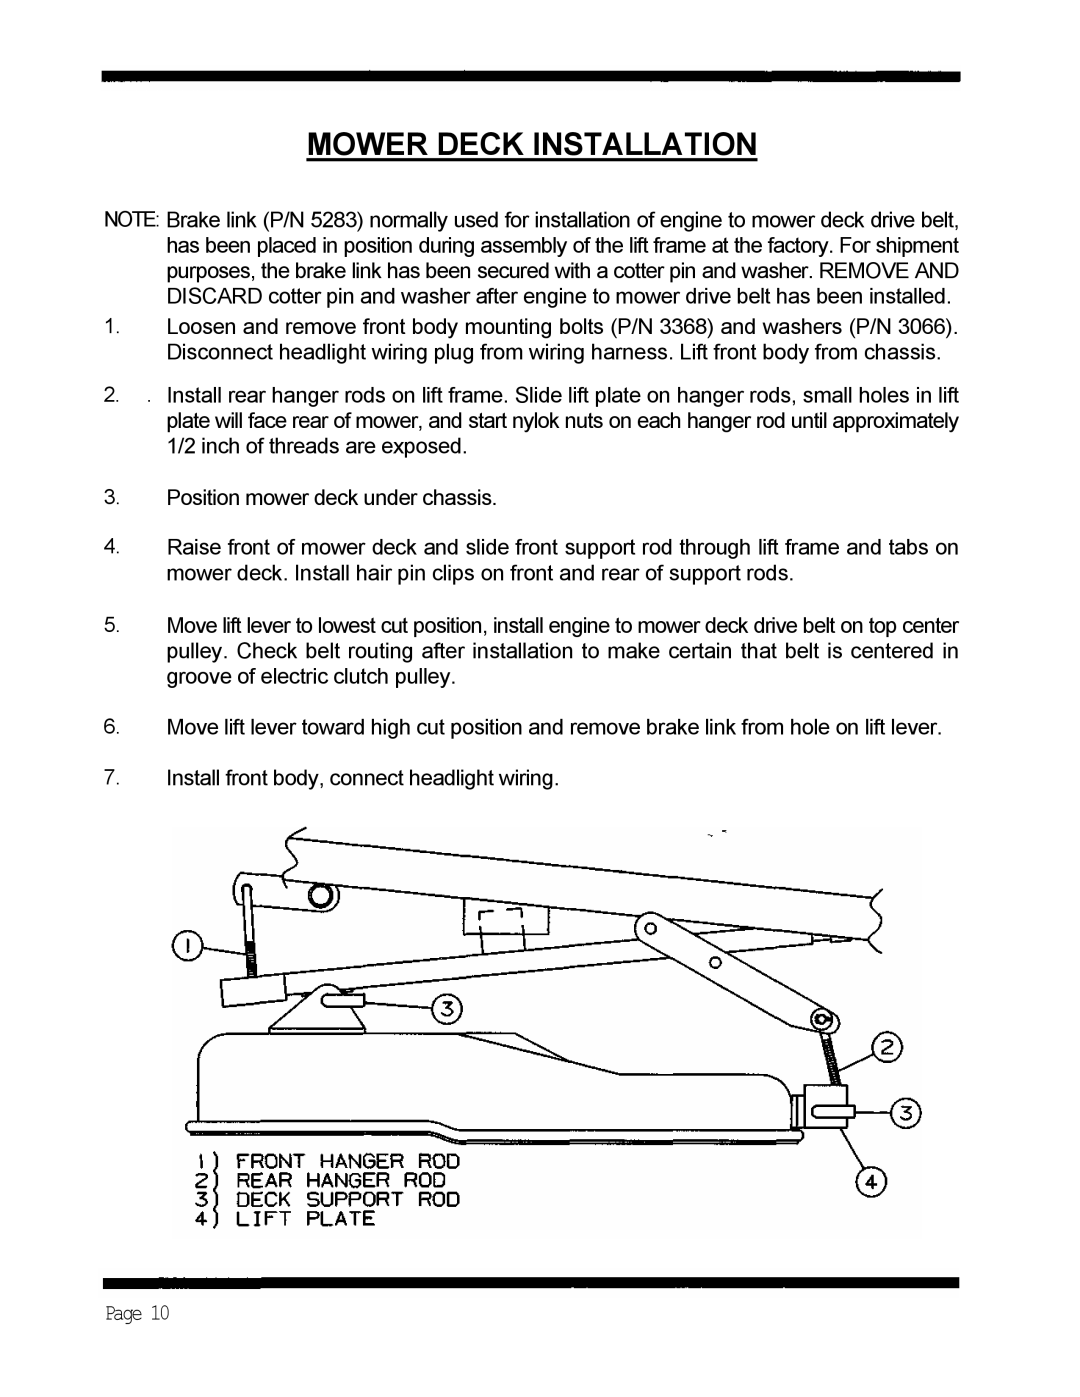 Dixon 5501 manual Mower Deck Installation 